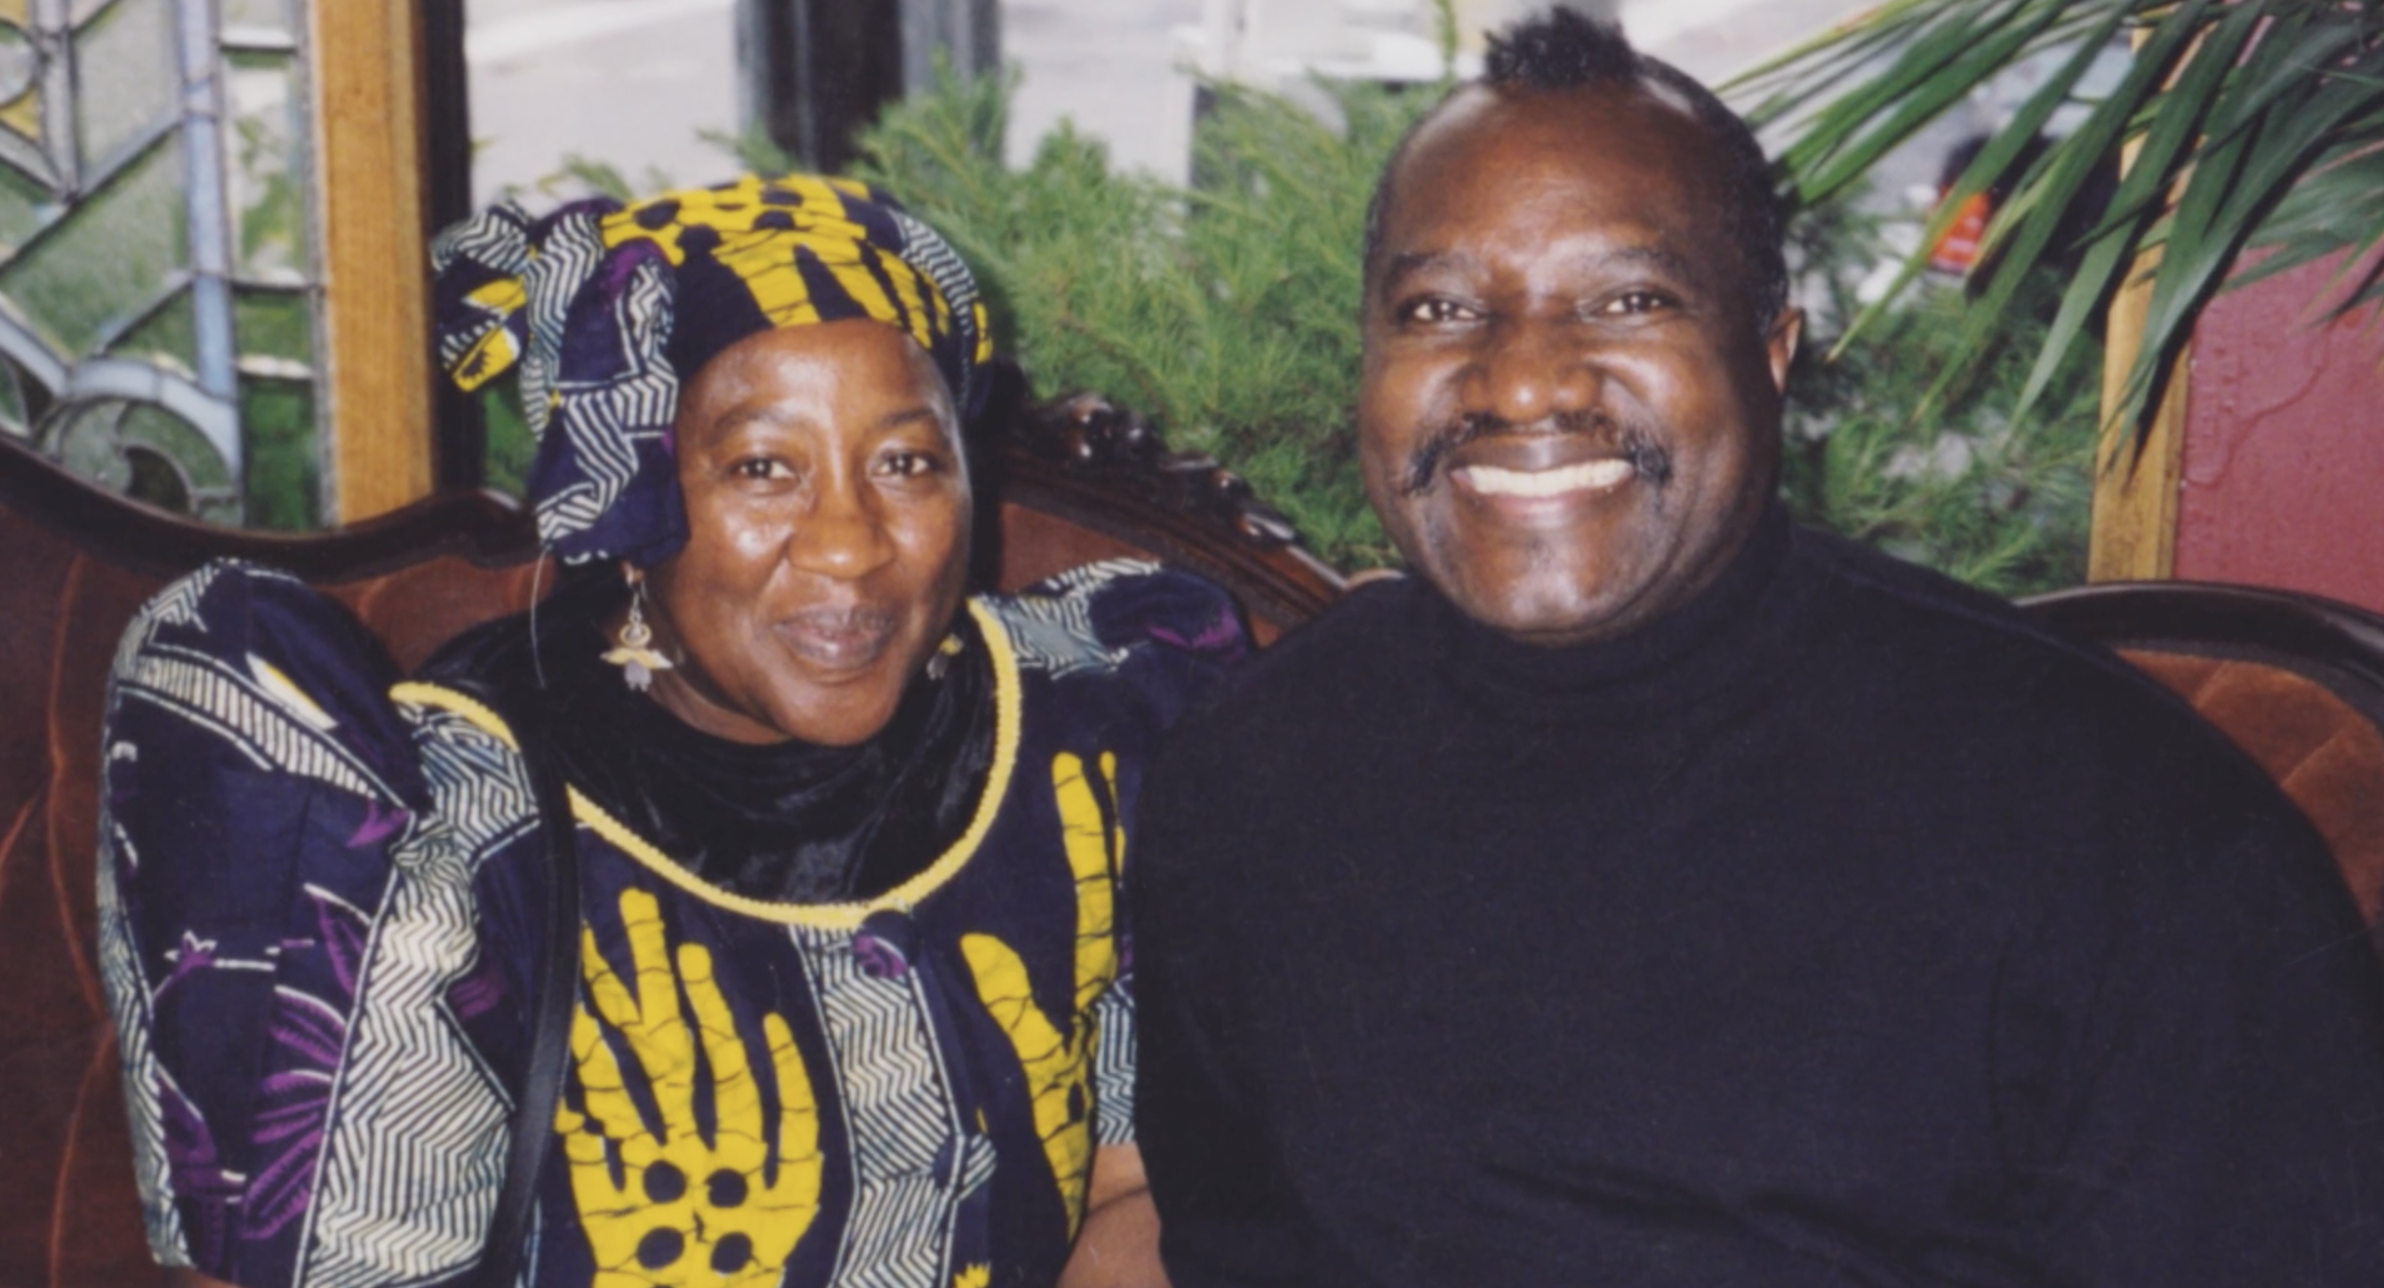   Aeeshah and Kokomon Clottey, the founders of Attitudinal Healing Connection - Oakland.  